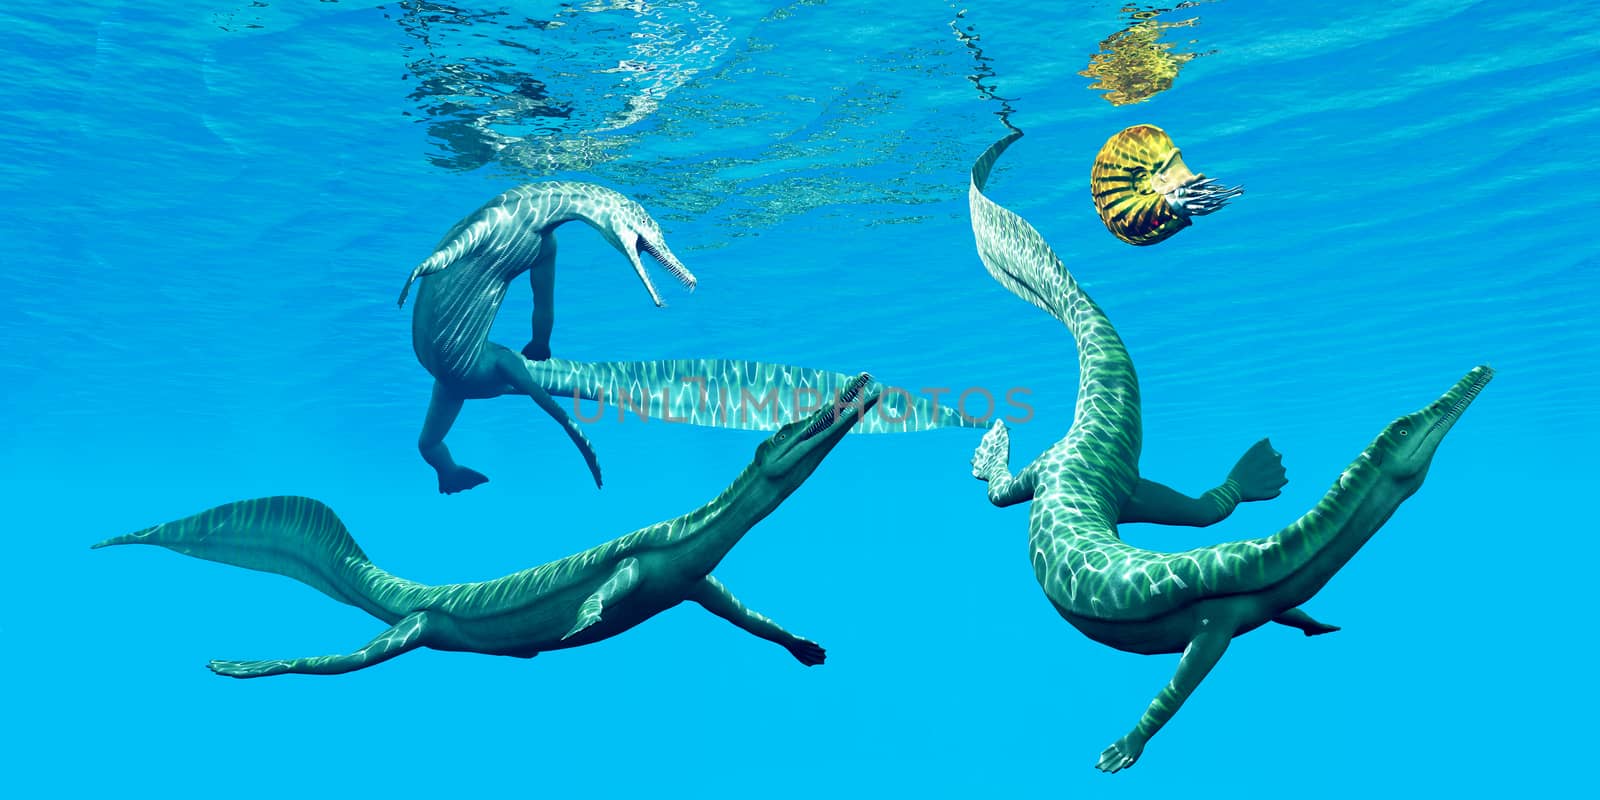 Mesosaurus Marine Reptiles by Catmando